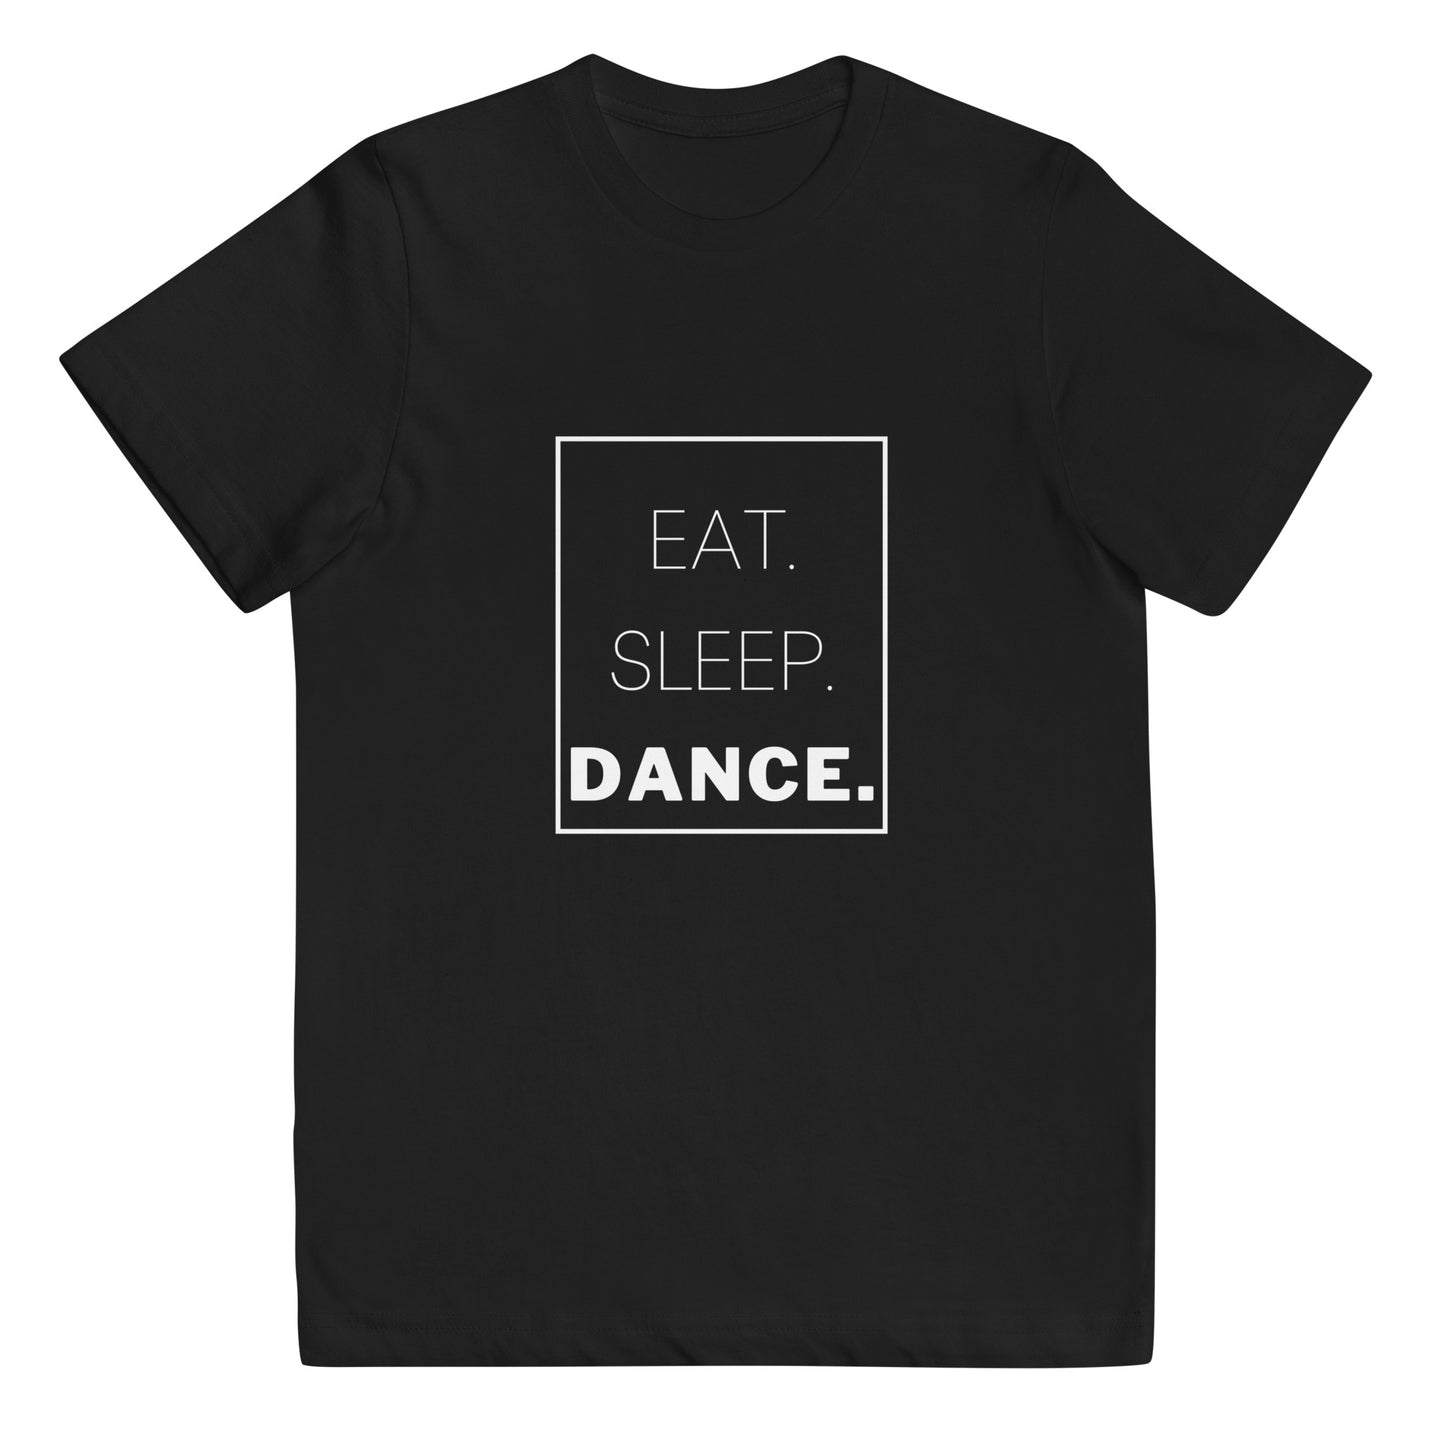 EAT. SLEEP. DANCE Youth jersey t-shirt